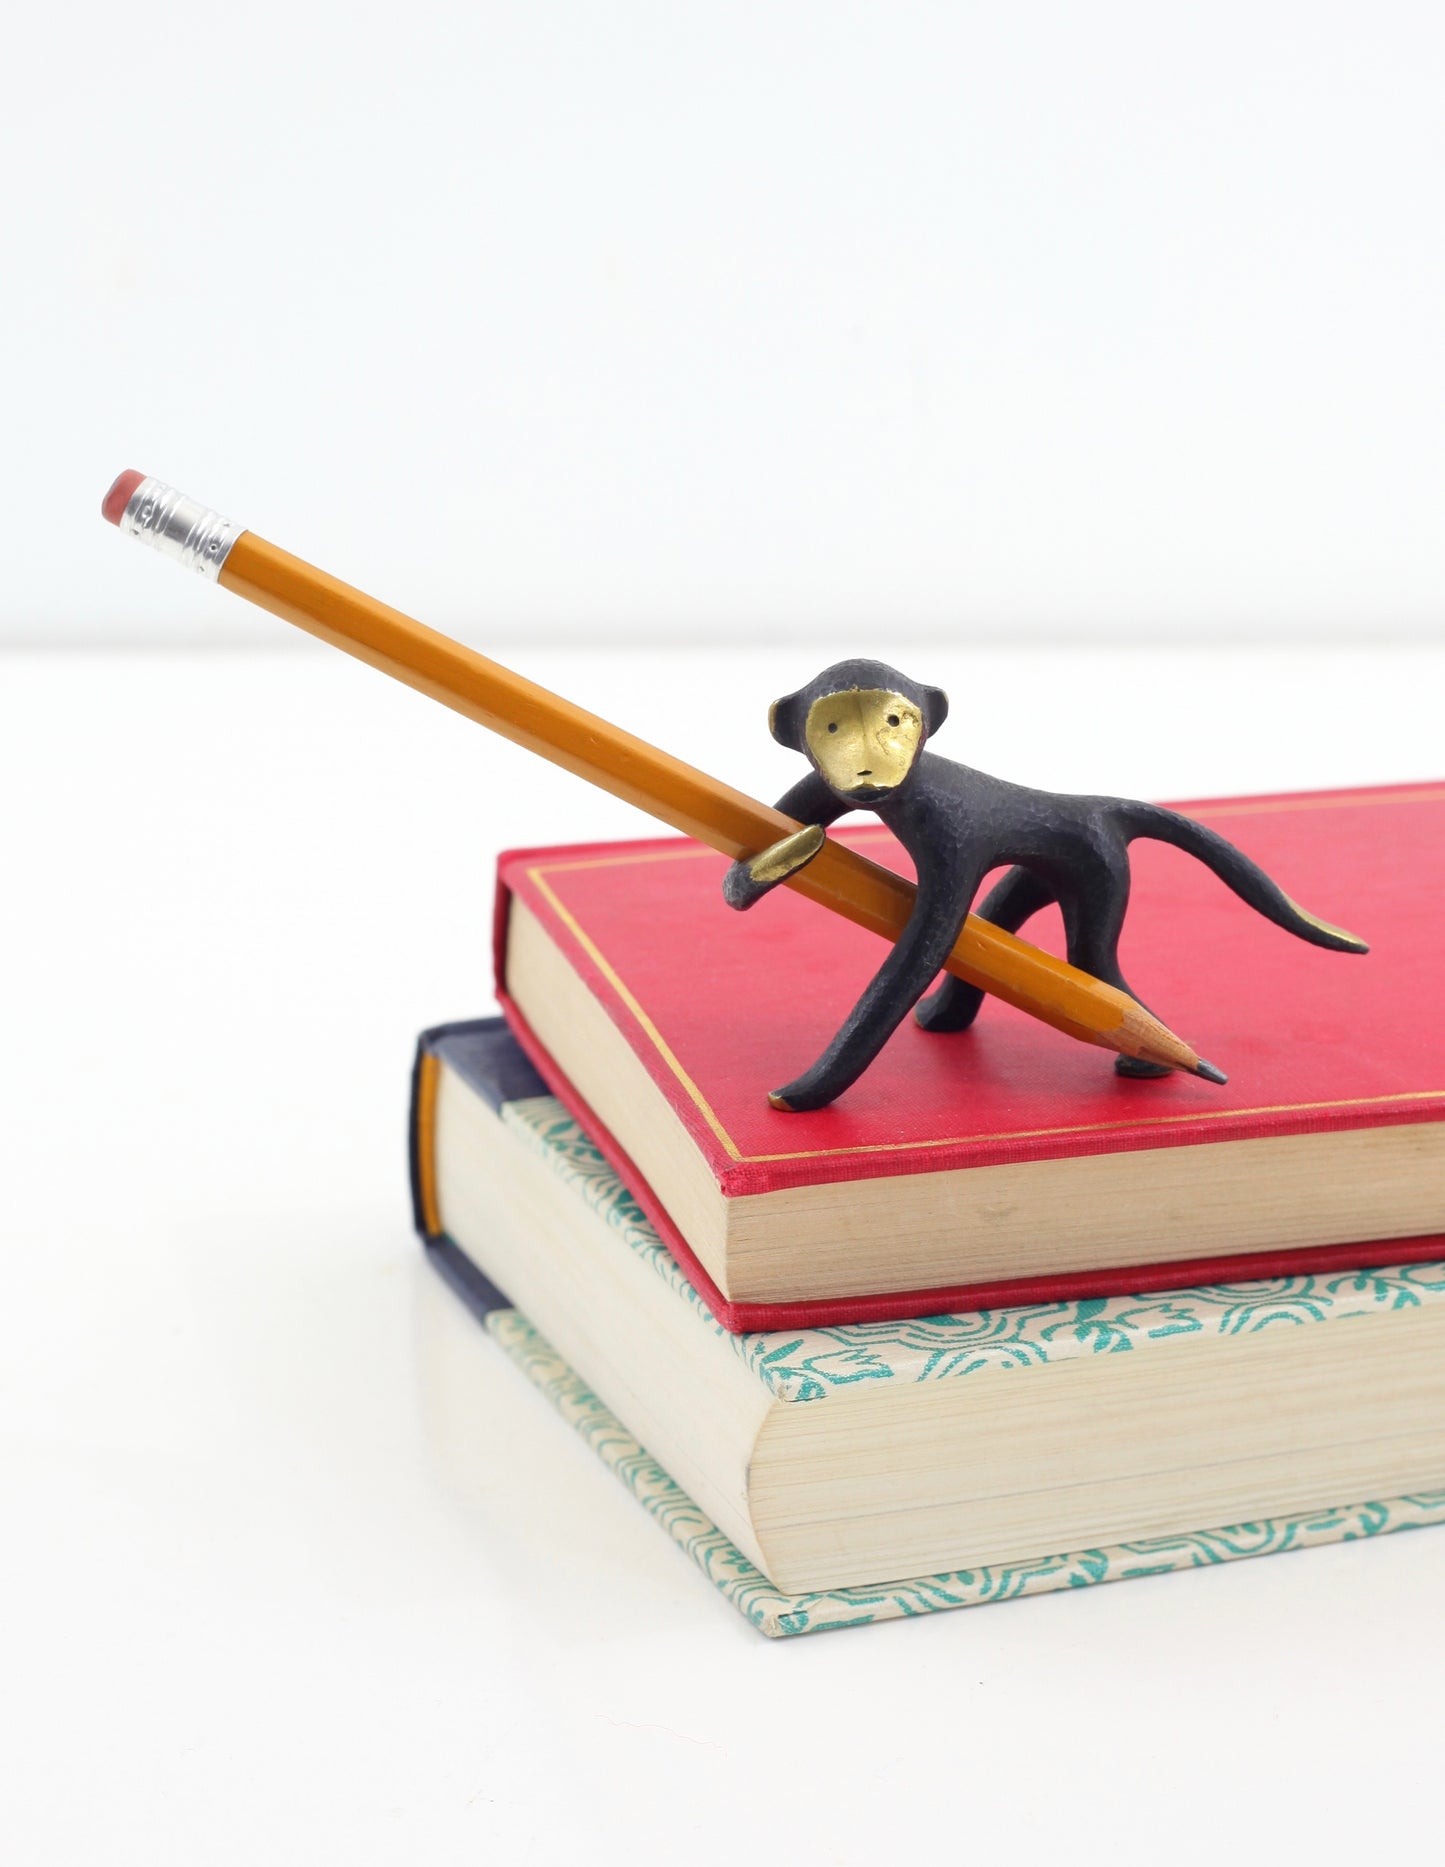 SOLD - Rare Mid Century Monkey Pen Holder by Walter Bosse